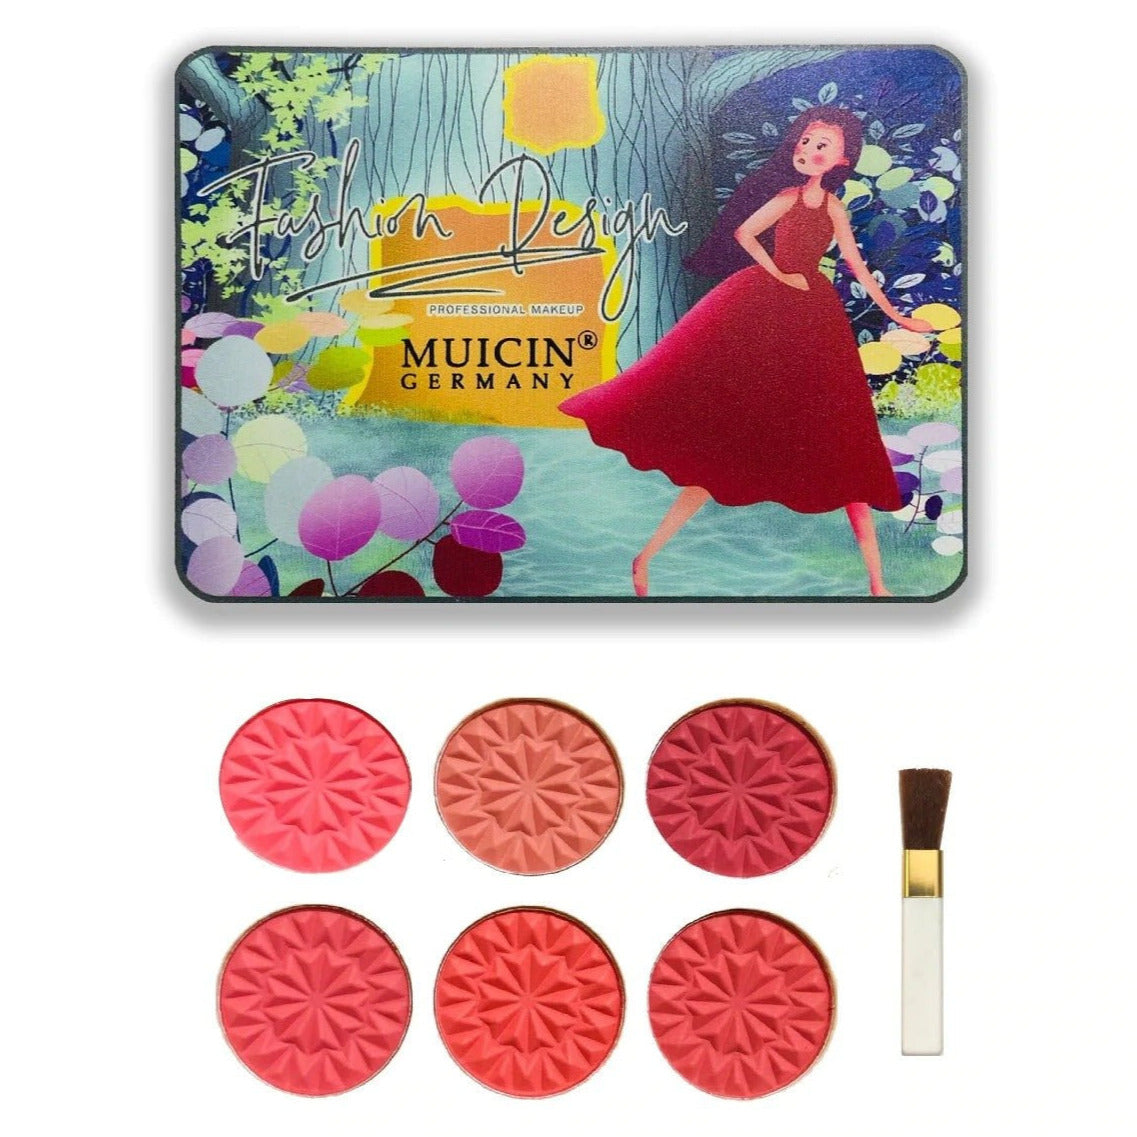 Buy  MUICIN - Fashion Design Matte Blusher & Eyeshadow Kit - 6 Colors - at Best Price Online in Pakistan